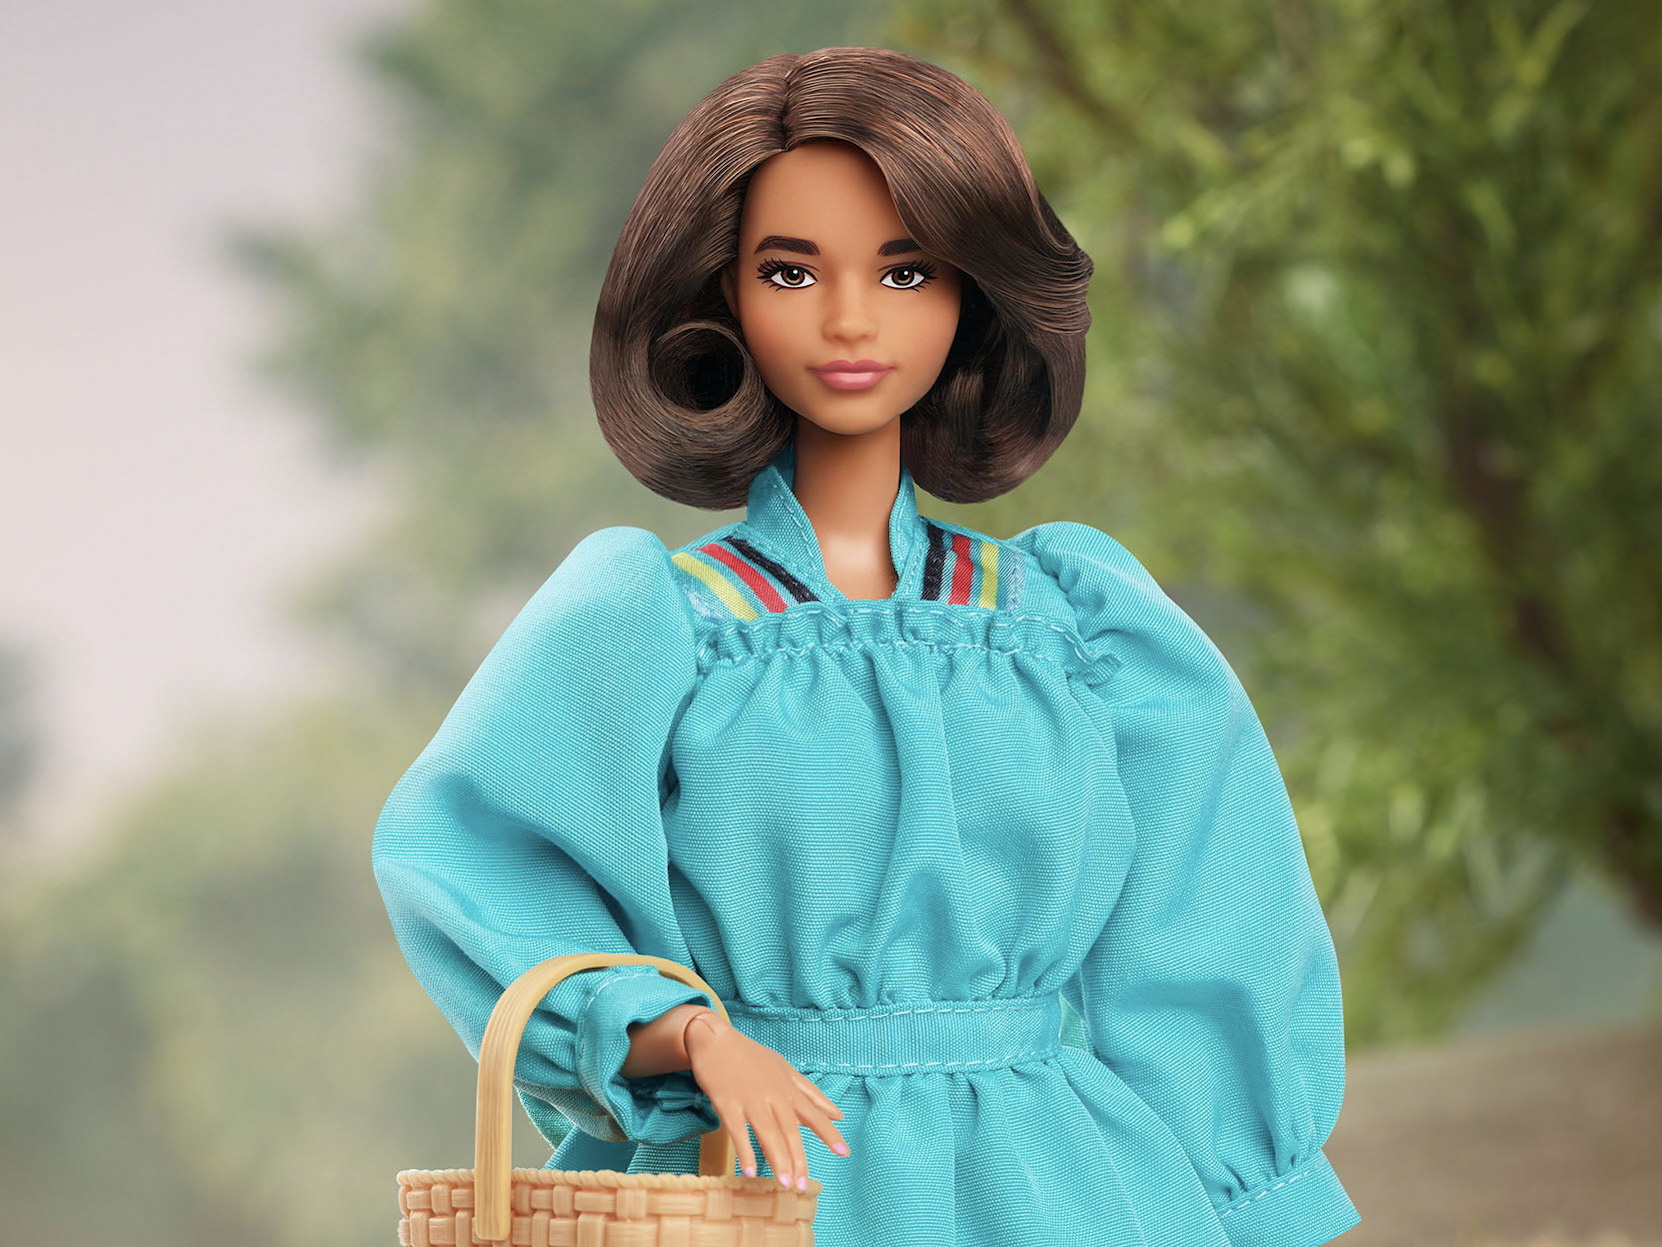 Cherokee leader Wilma Mankiller joins ‘Inspiring Women’ lineup of Barbie dolls